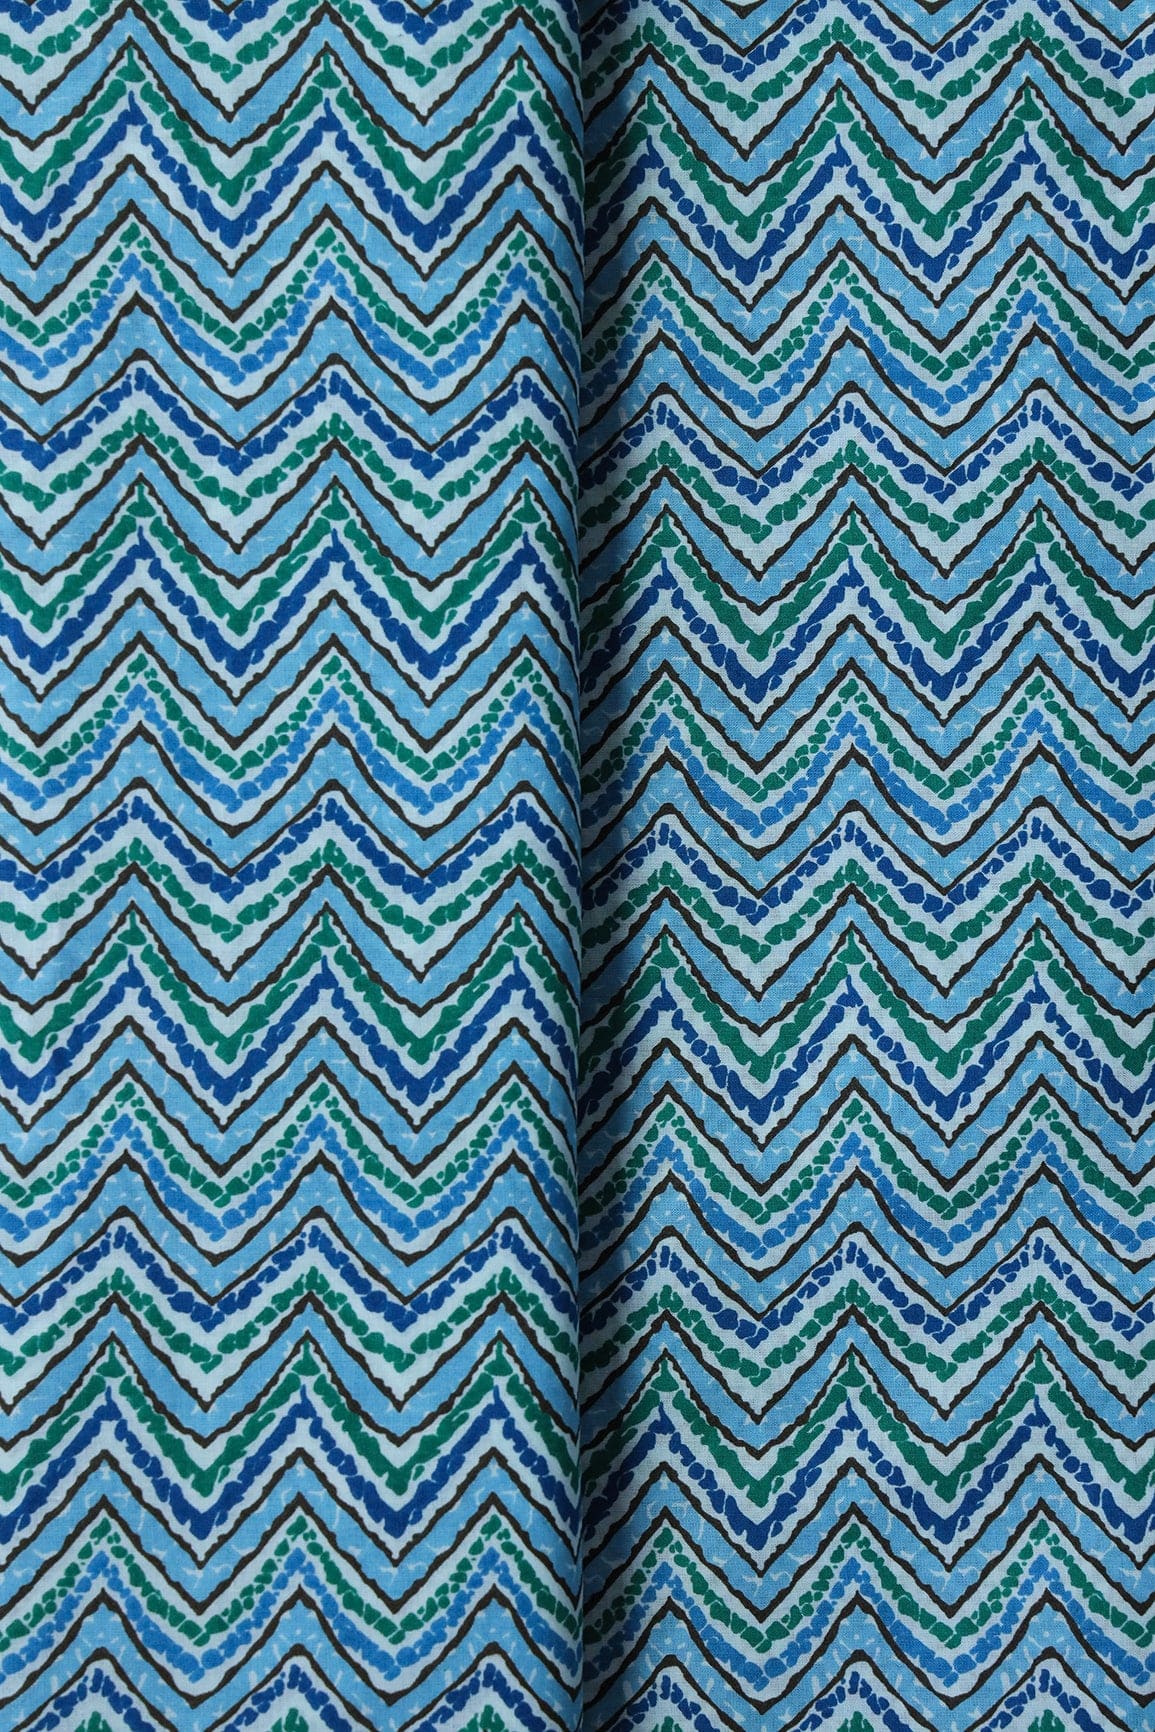 doeraa Prints Green And Carolina Blue Chevron Print On Pure Mul Cotton Fabric